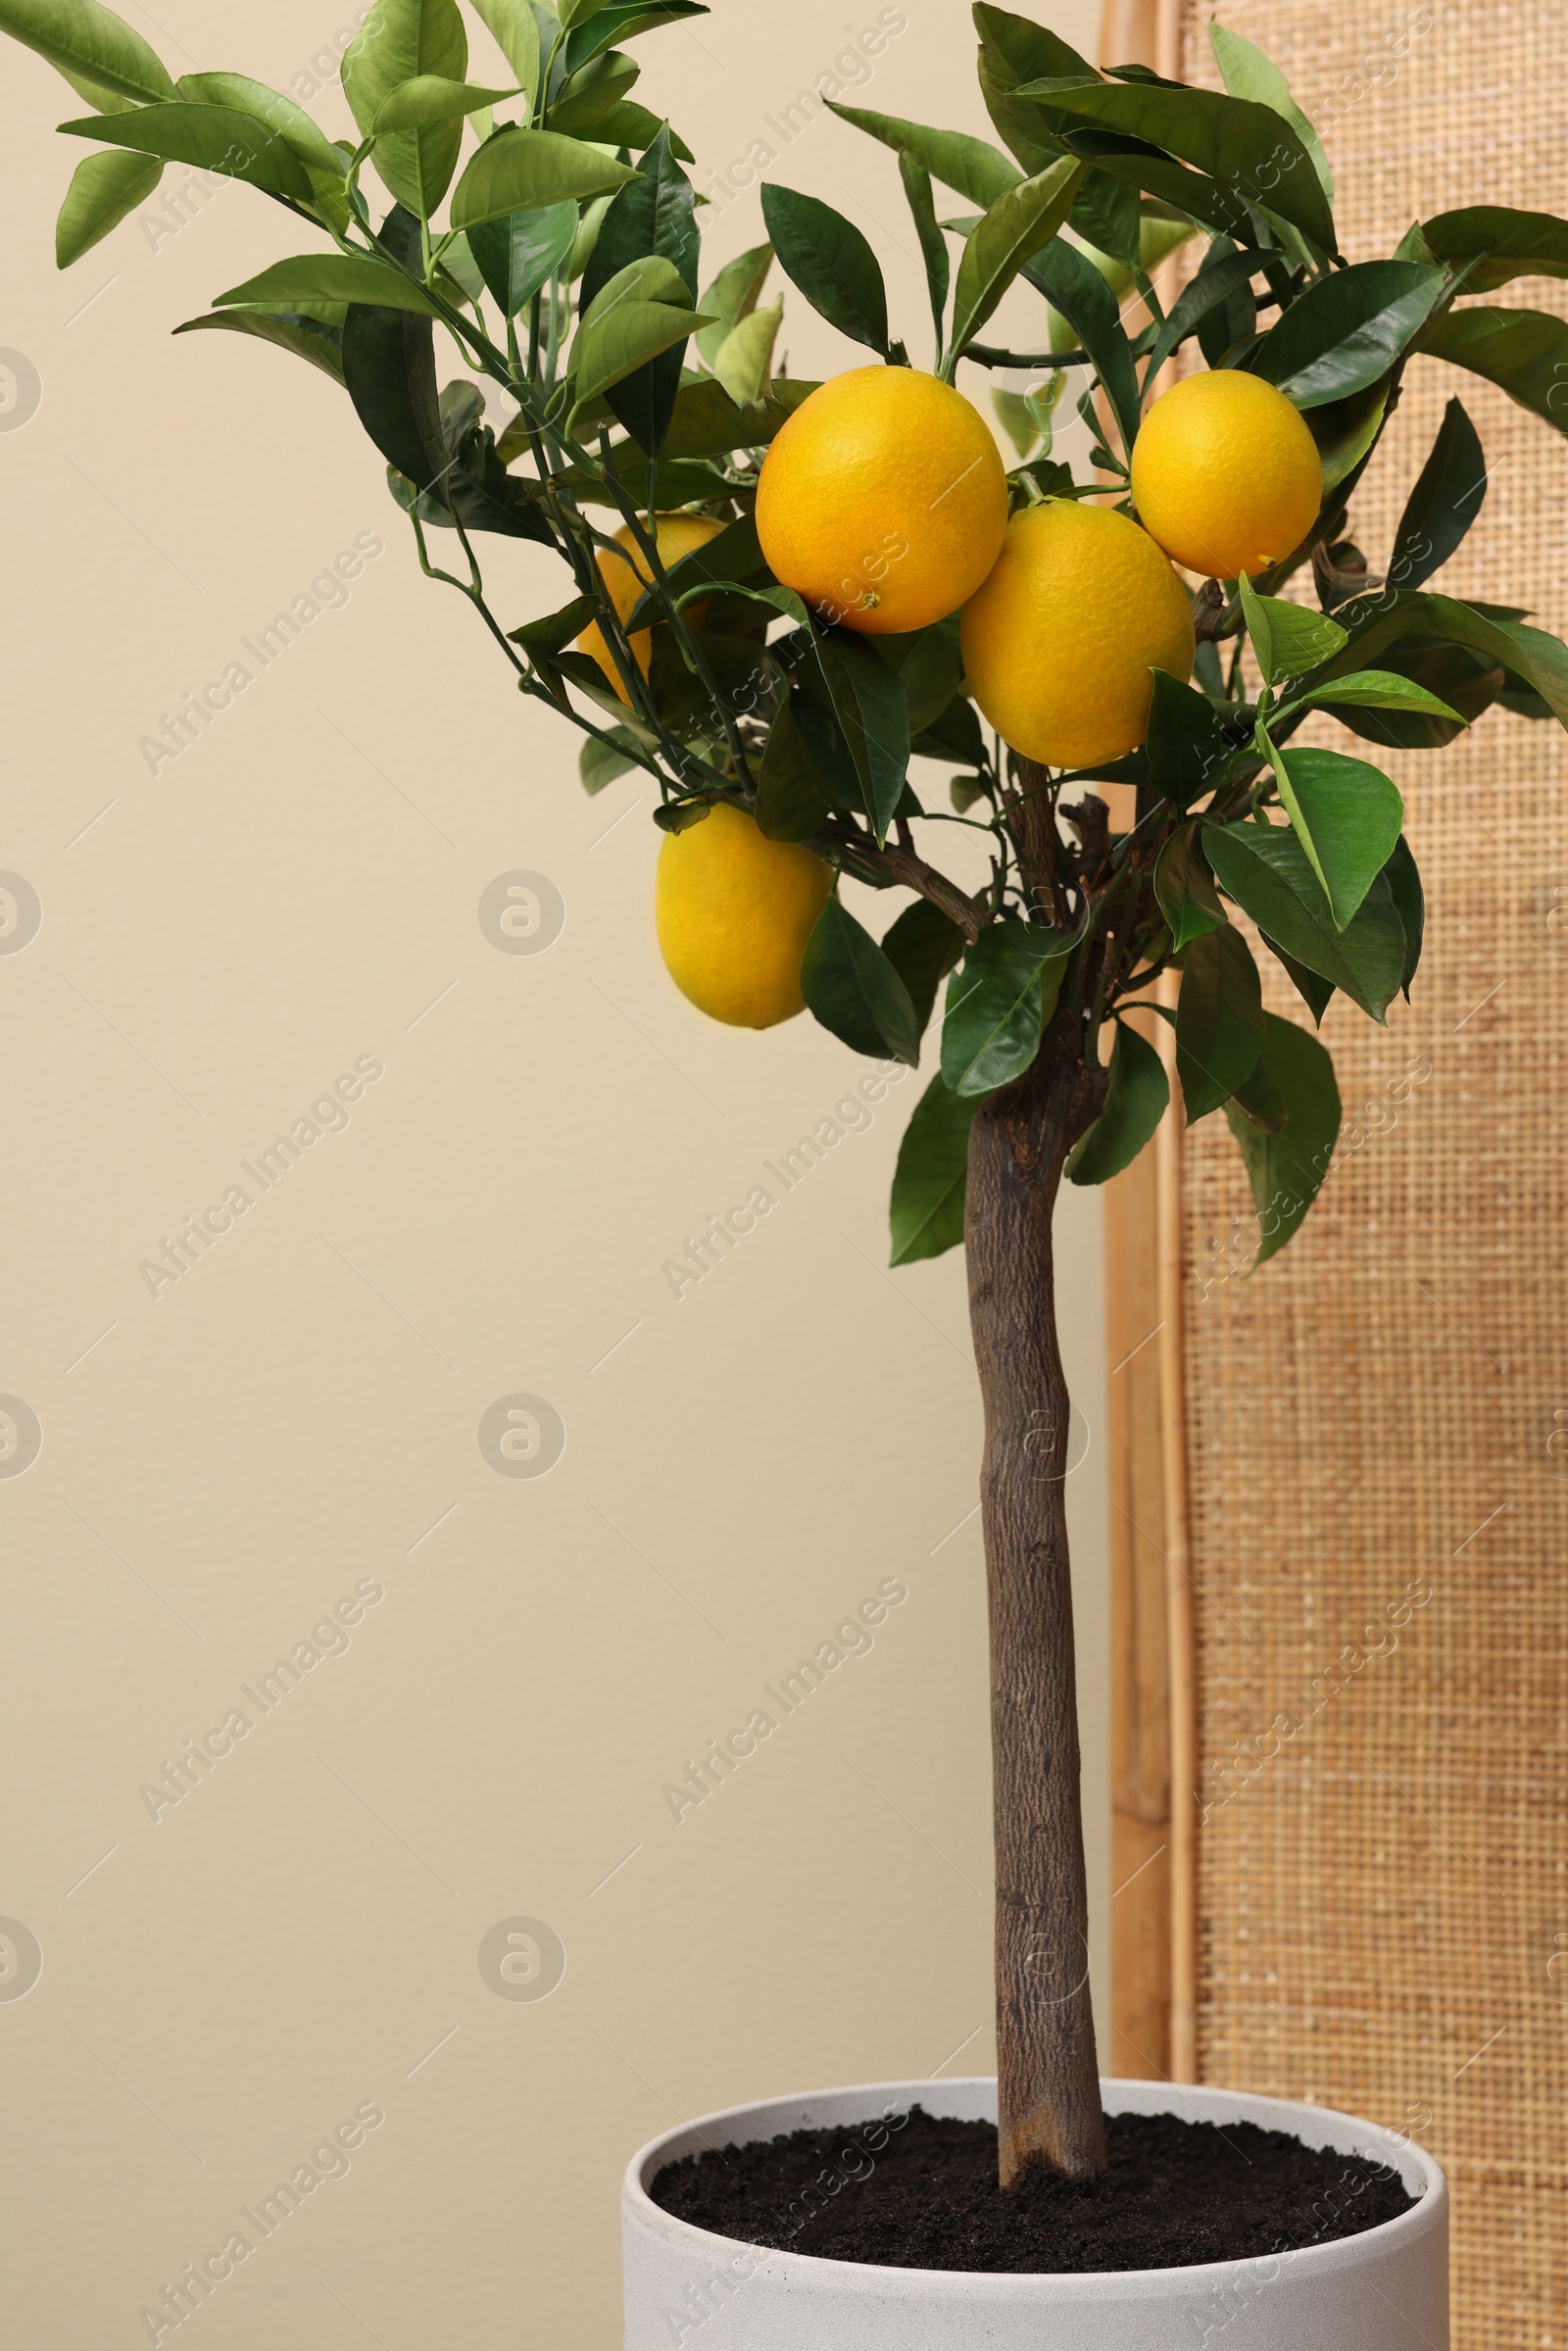 Photo of Idea for minimalist interior design. Small potted lemon tree near beige wall indoors